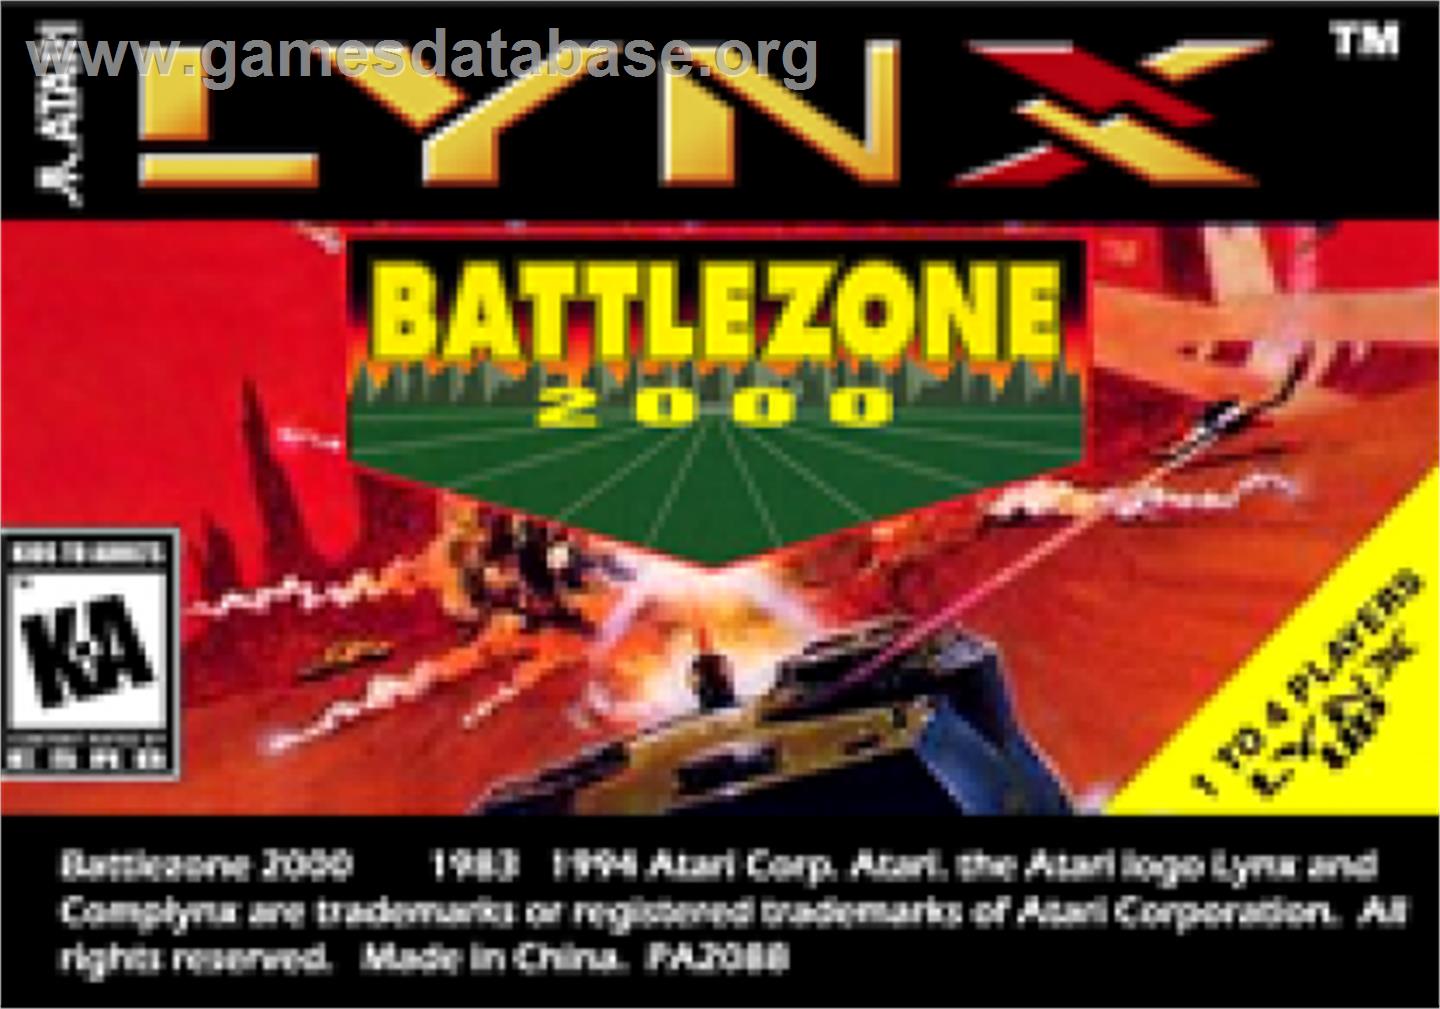 Battlezone 2000 - Atari Lynx - Artwork - Cartridge Top